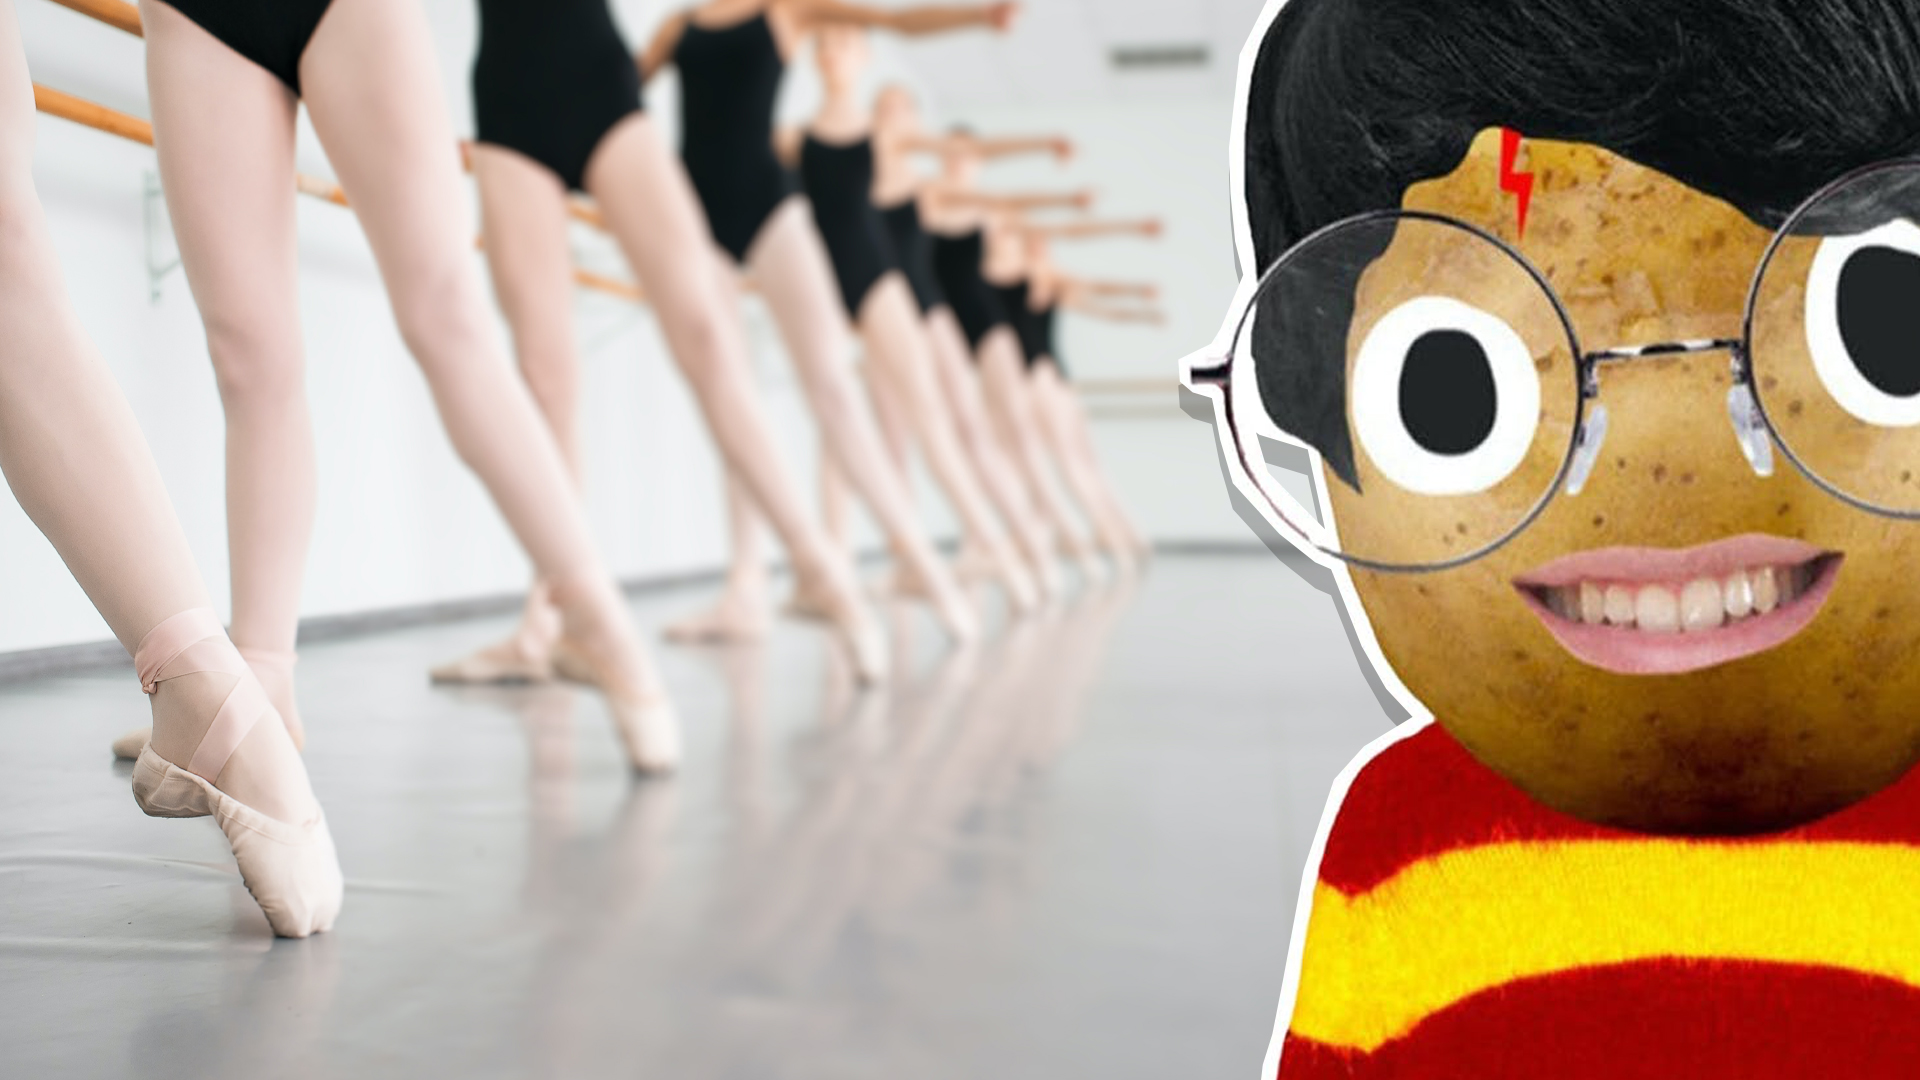 Harry Potter in a ballet studio